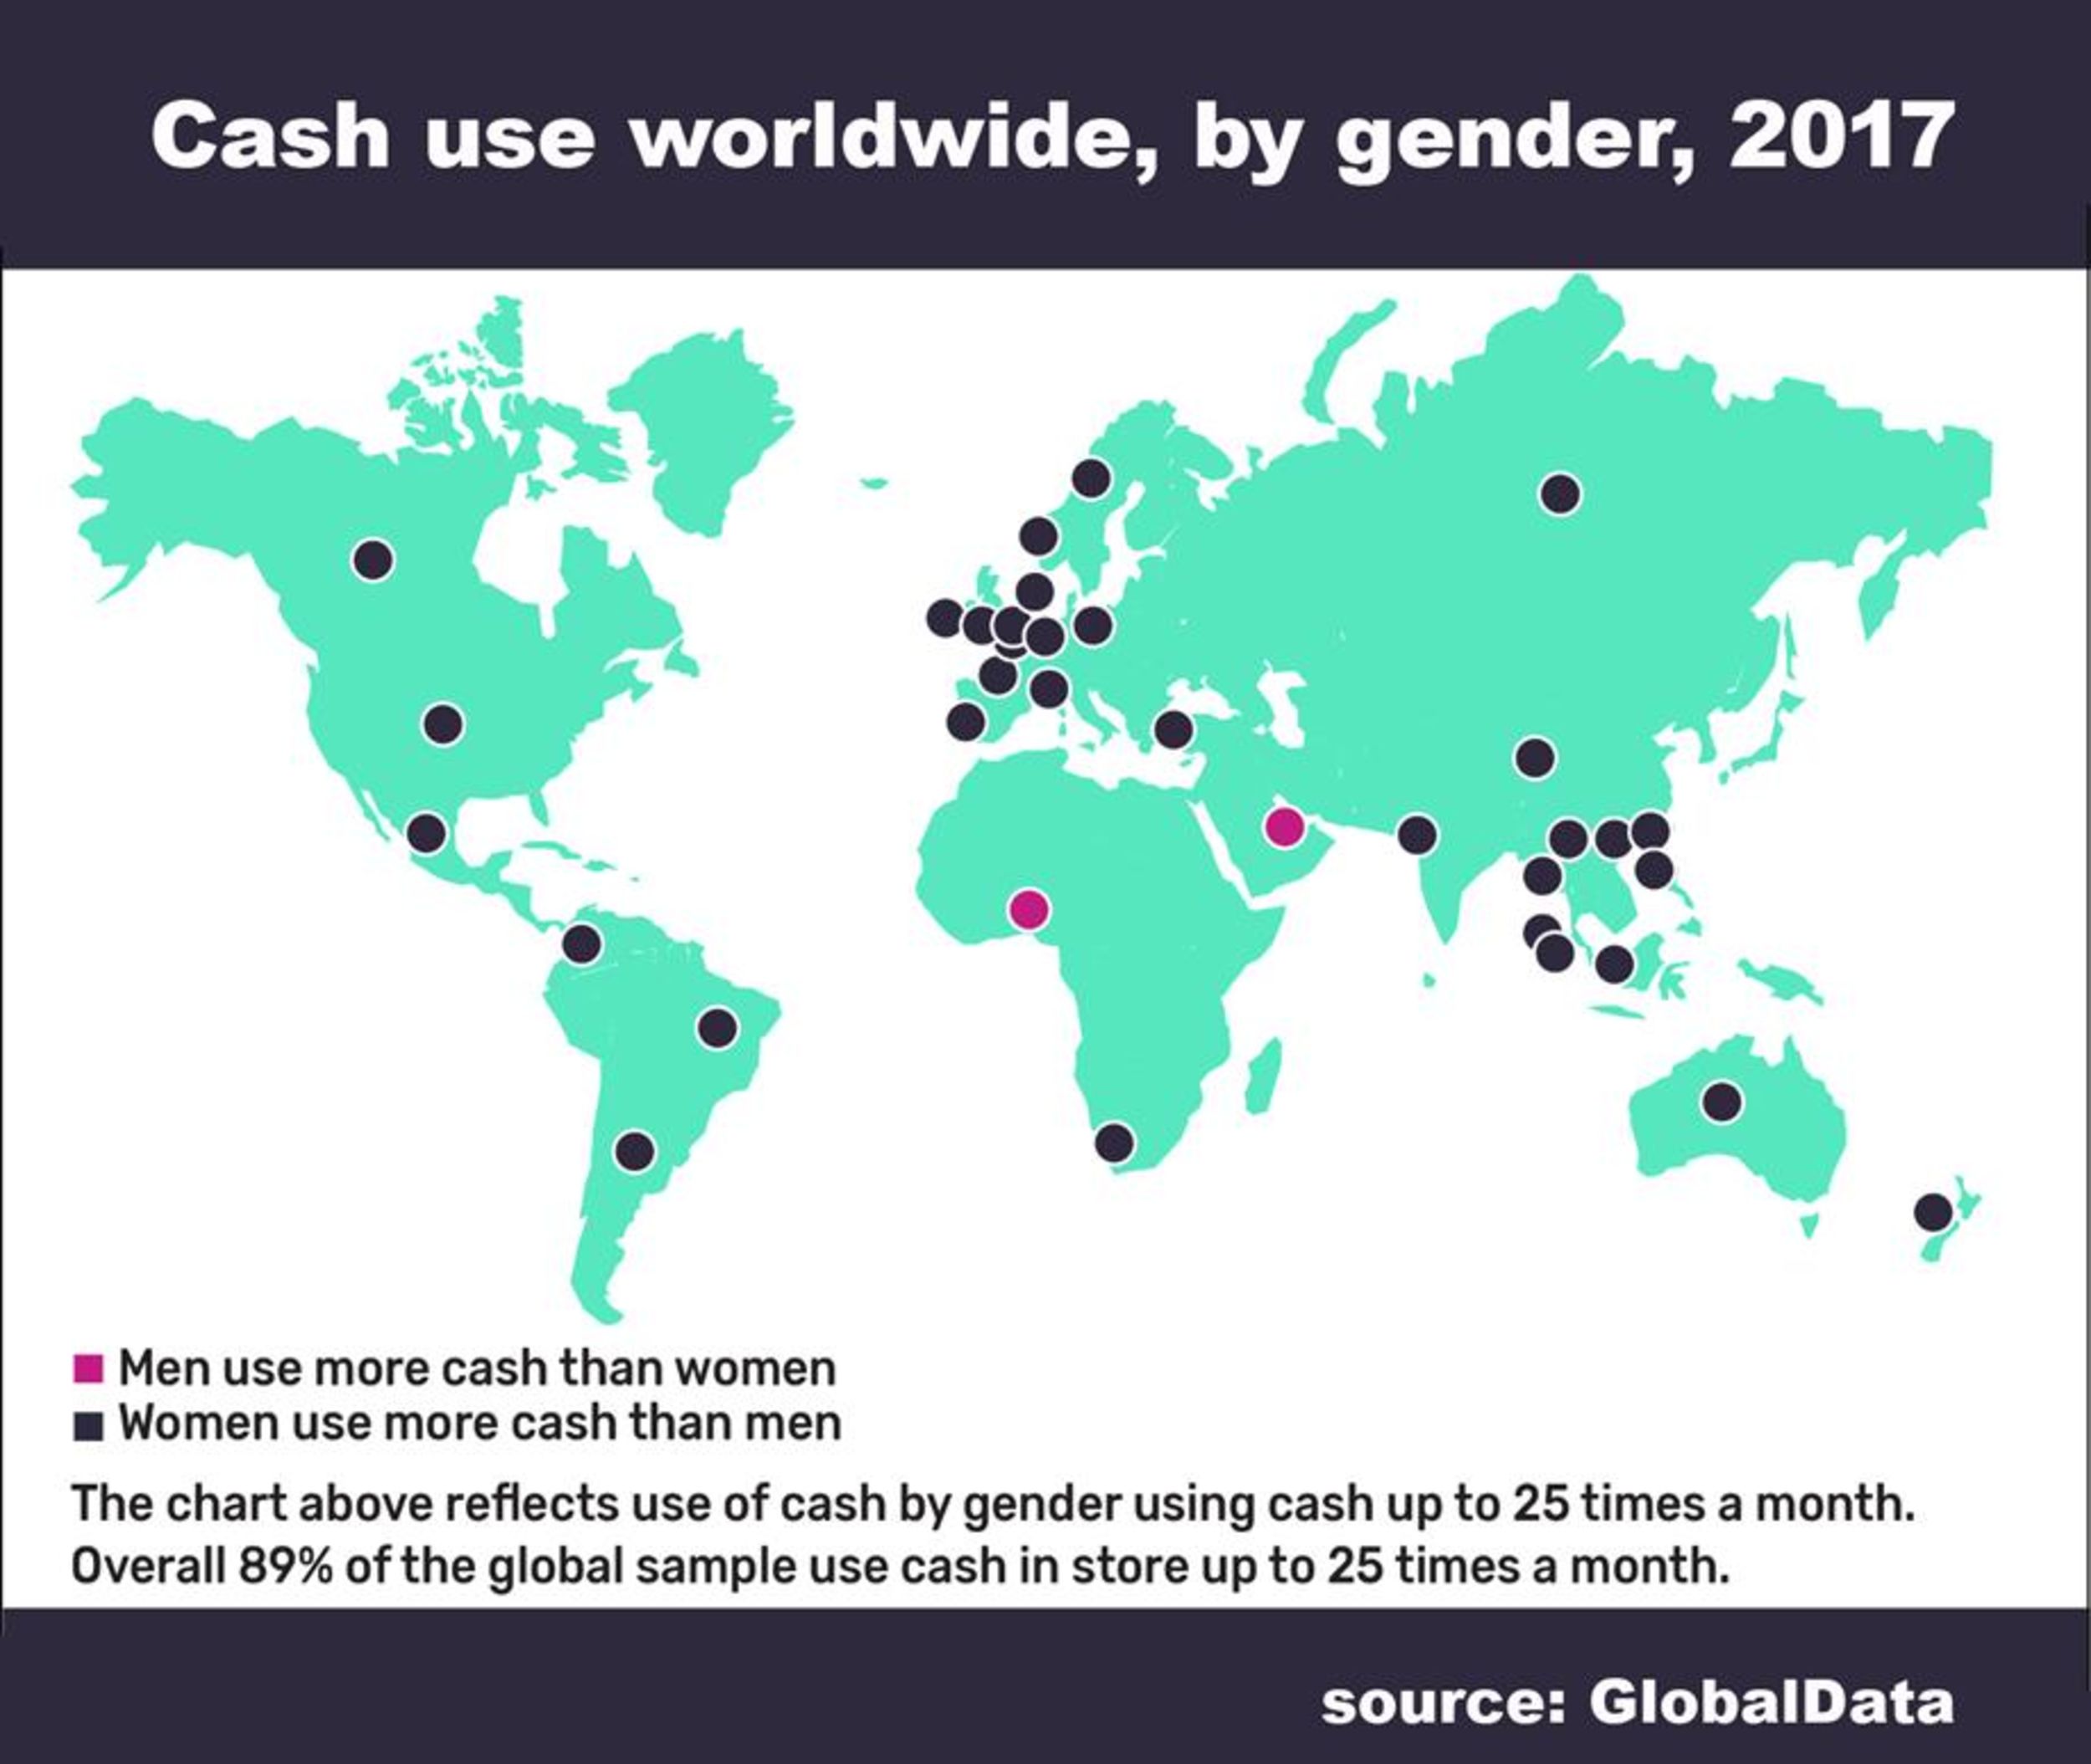 Cash usage around the world, women use cash more than men